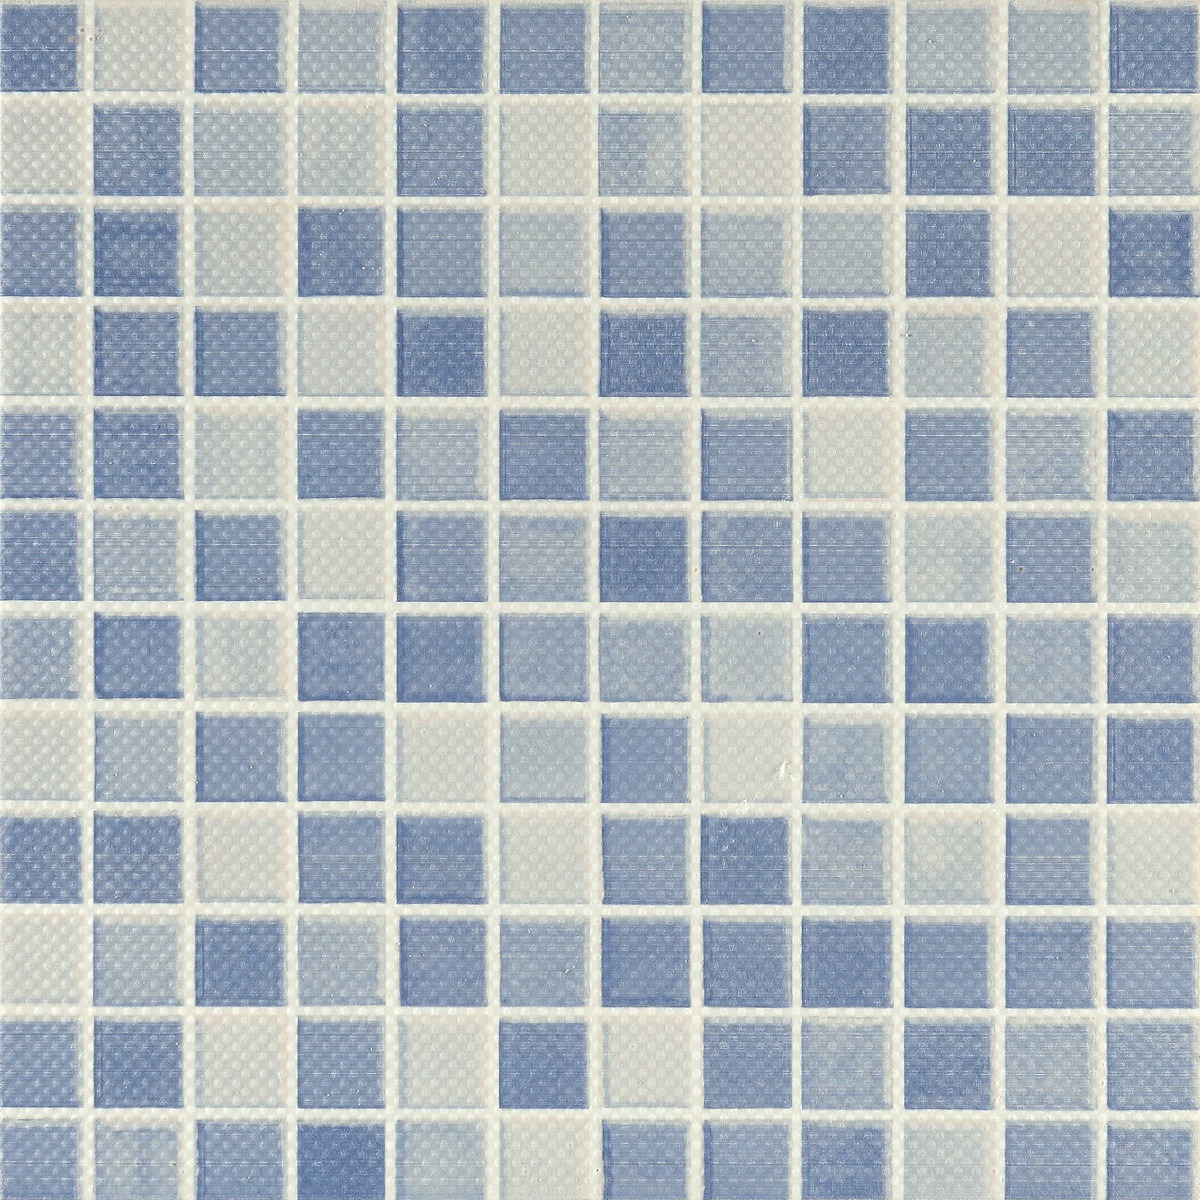 Glass Mosaic Tiles for Bathroom Tiles, Balcony Tiles, Hospital Tiles, Bar/Restaurant, Commercial/Office, Outdoor/Terrace